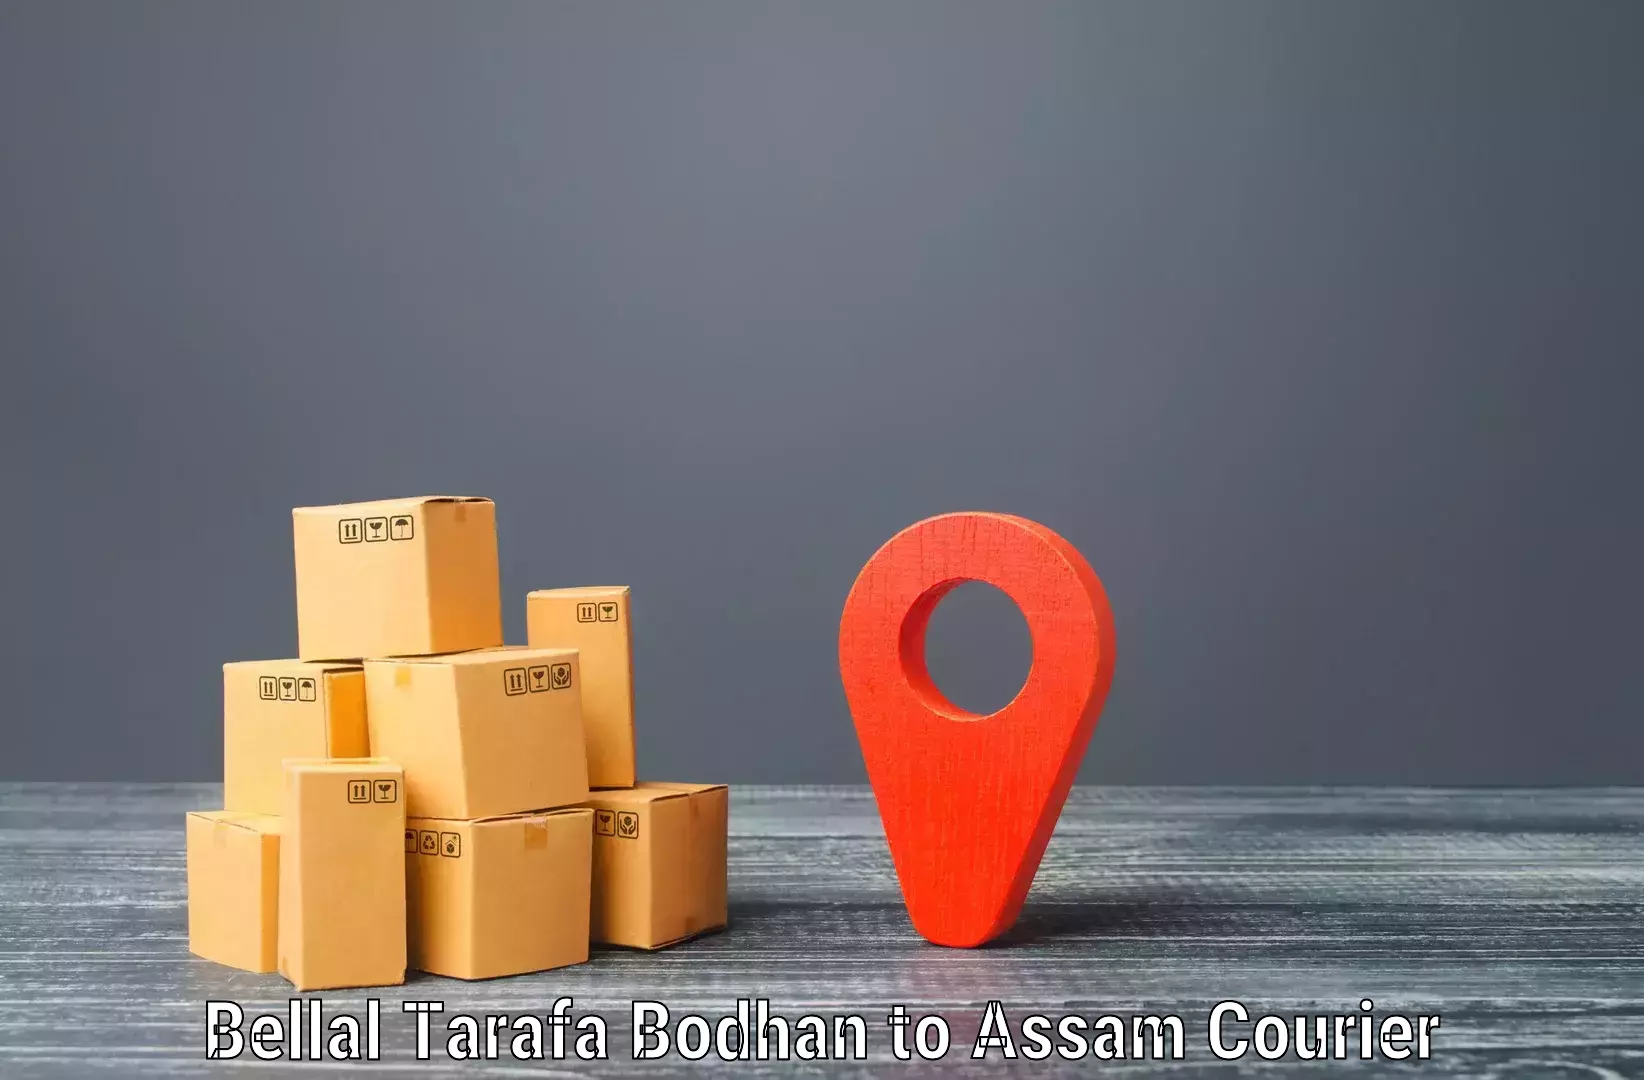 Express courier capabilities Bellal Tarafa Bodhan to Guwahati University